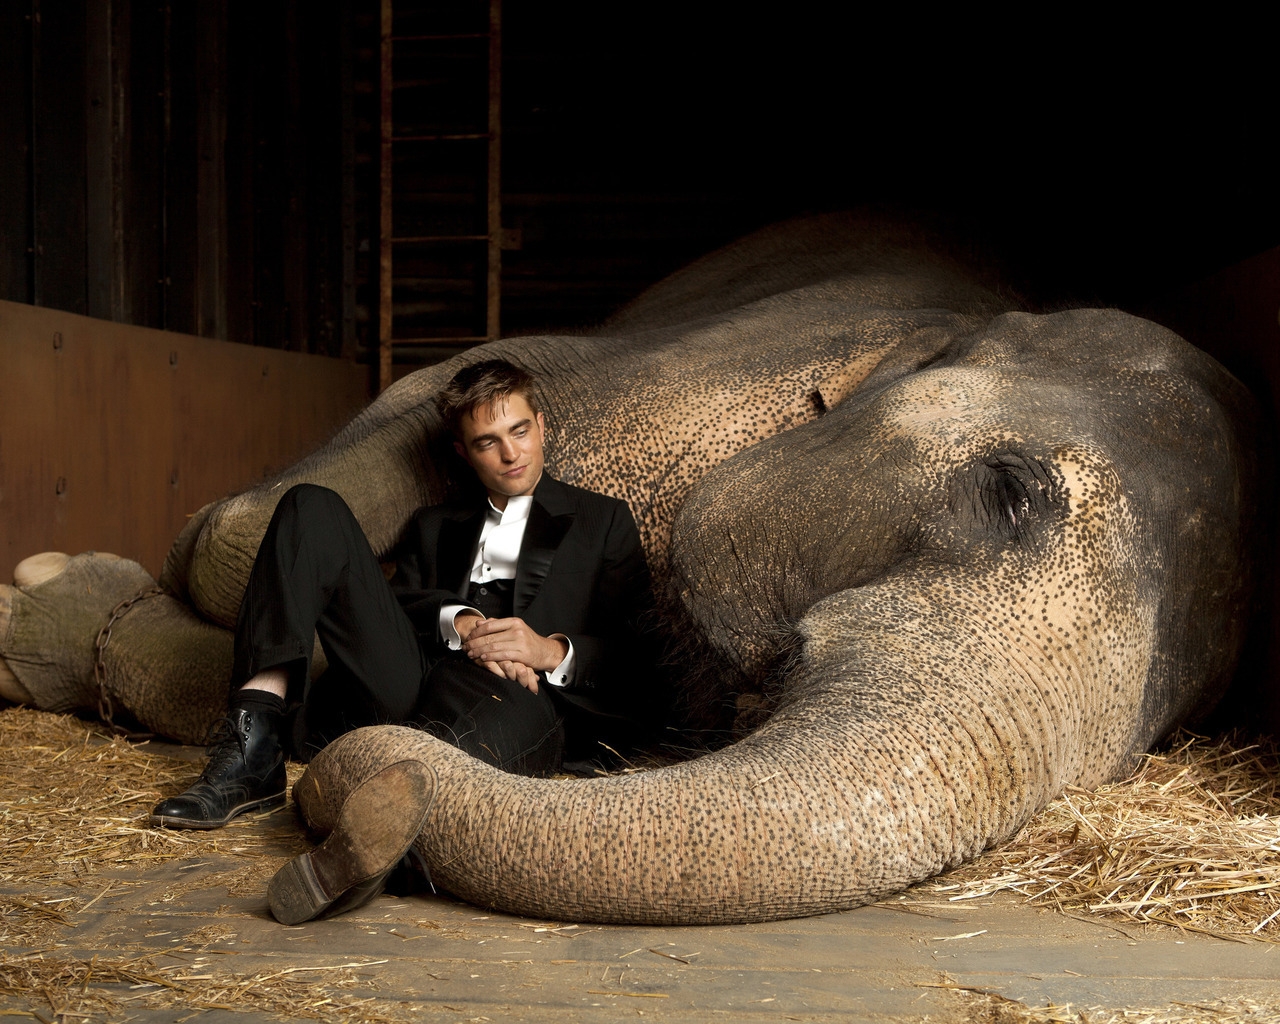 Robert Pattinson Close to Elephant for 1280 x 1024 resolution